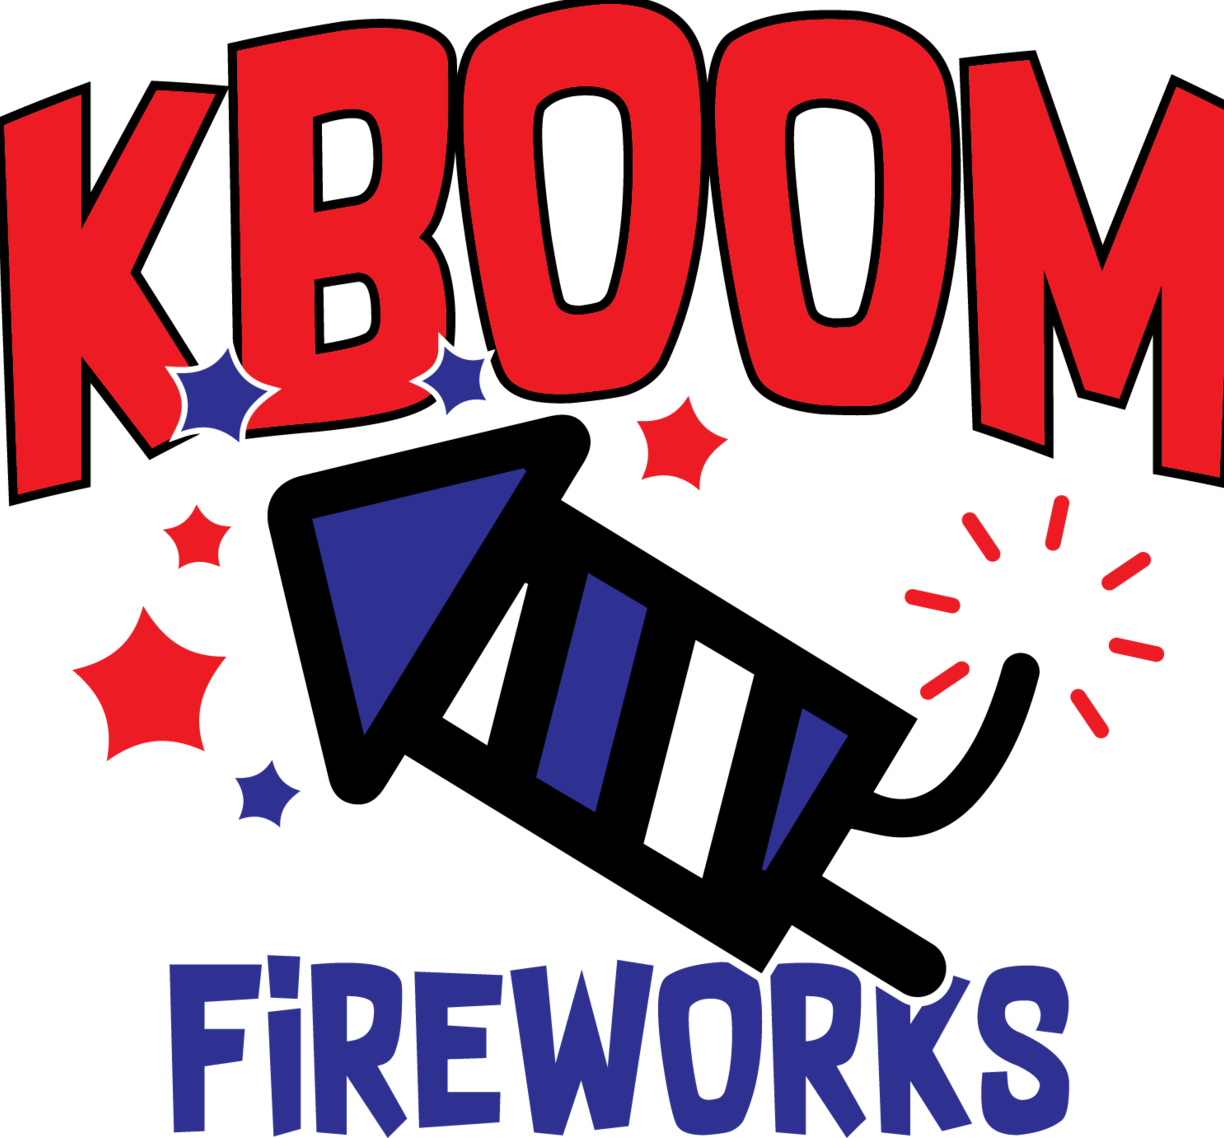 Kboom Logo 002